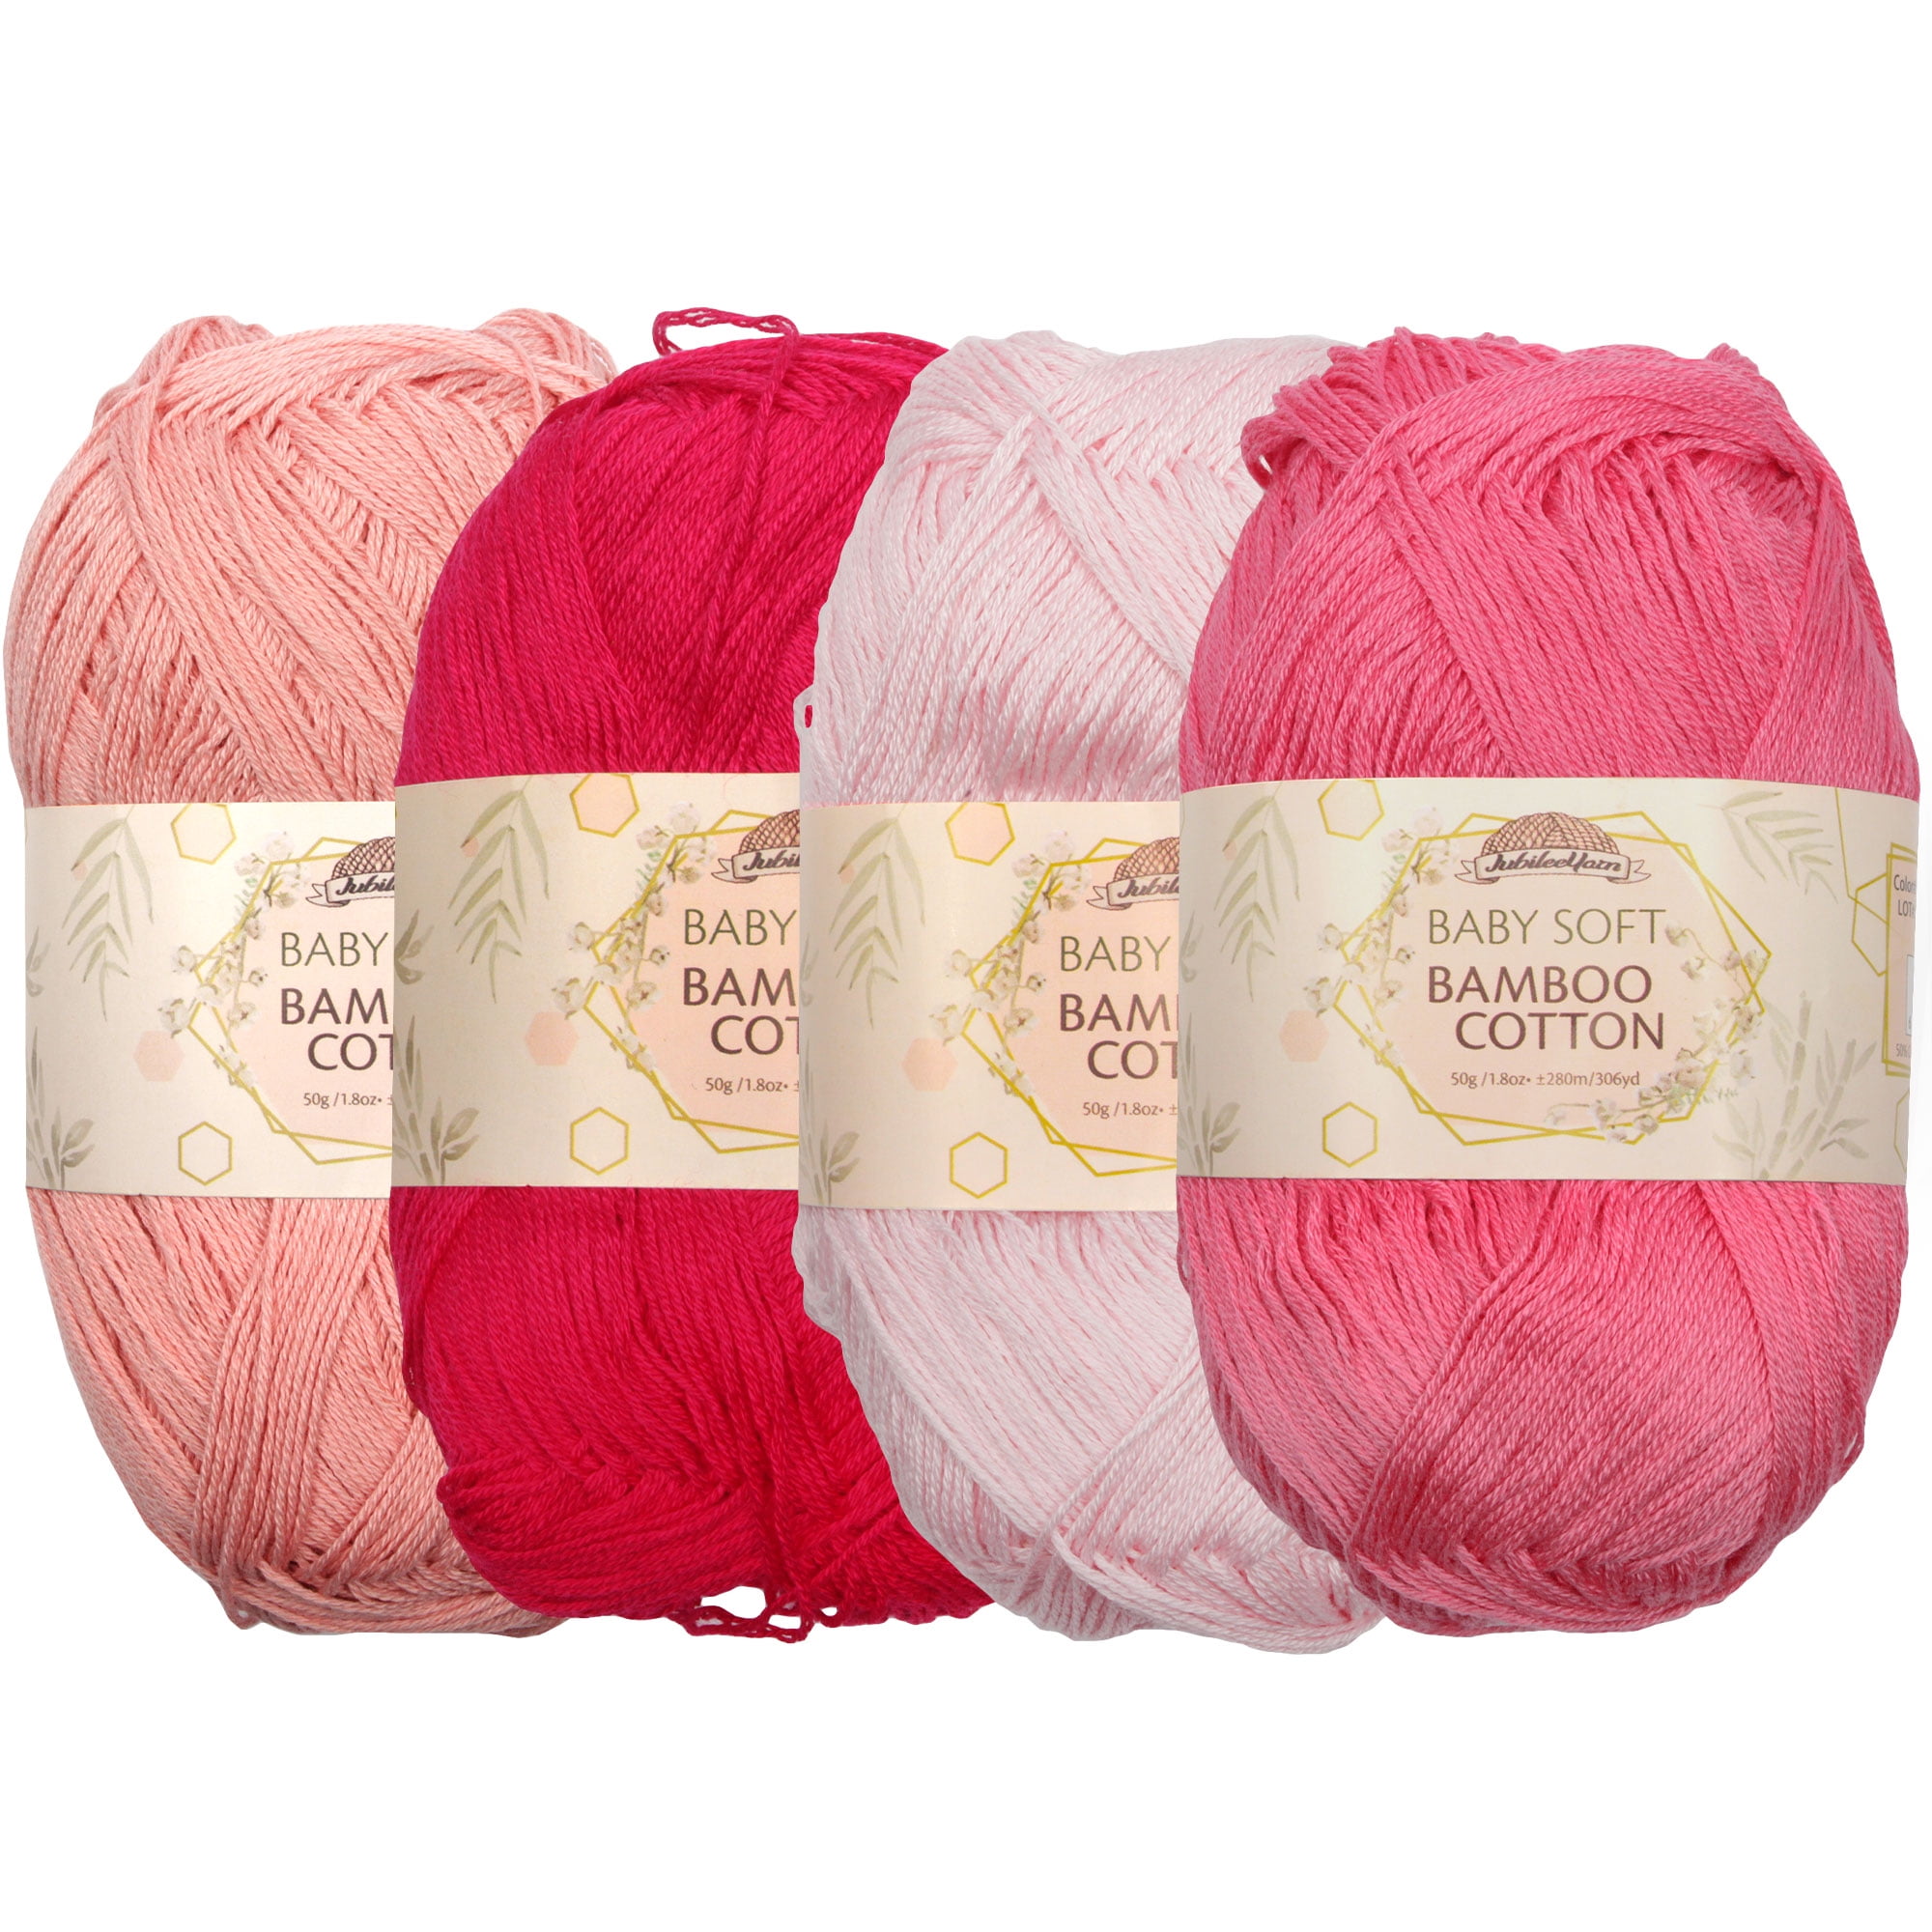 JubileeYarn Cotton Select Yarn - Sport Weight - 50g/Skein - Shades of Pink  - 4 Skeins